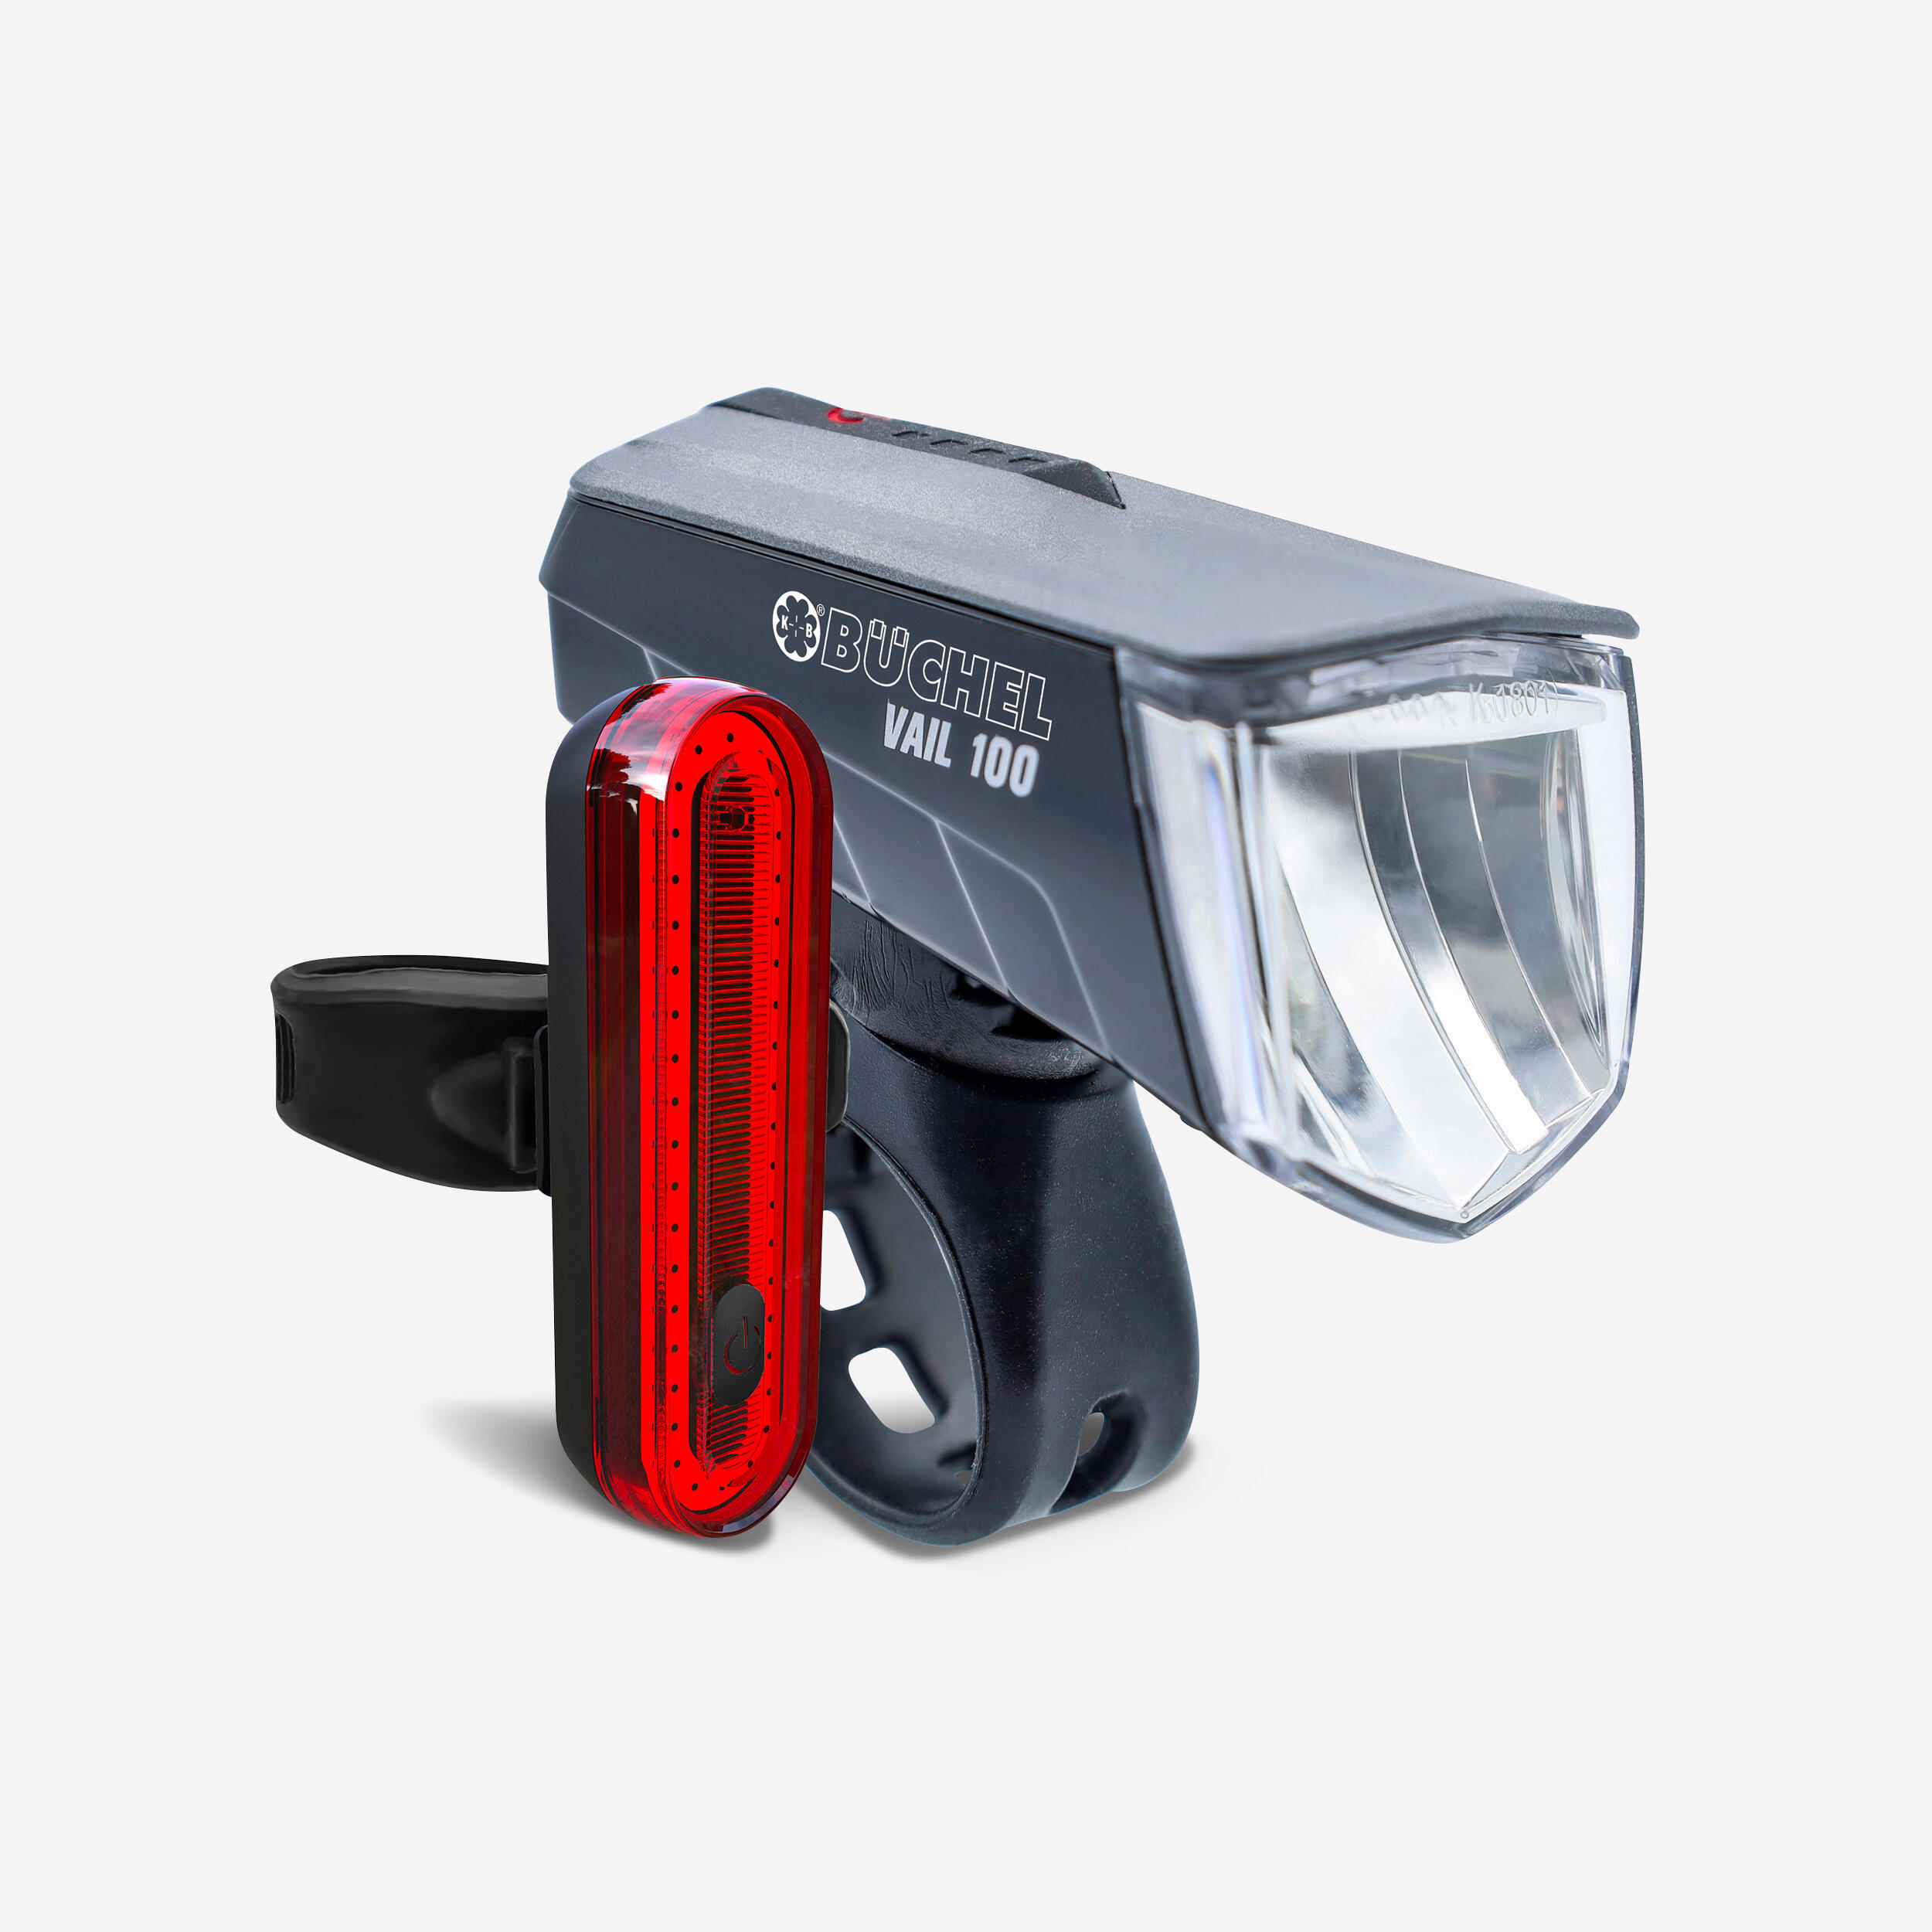 BÜCHEL Bike Light Kit Vail 100 USB + Micro Lens COB with Deceleration Sensor